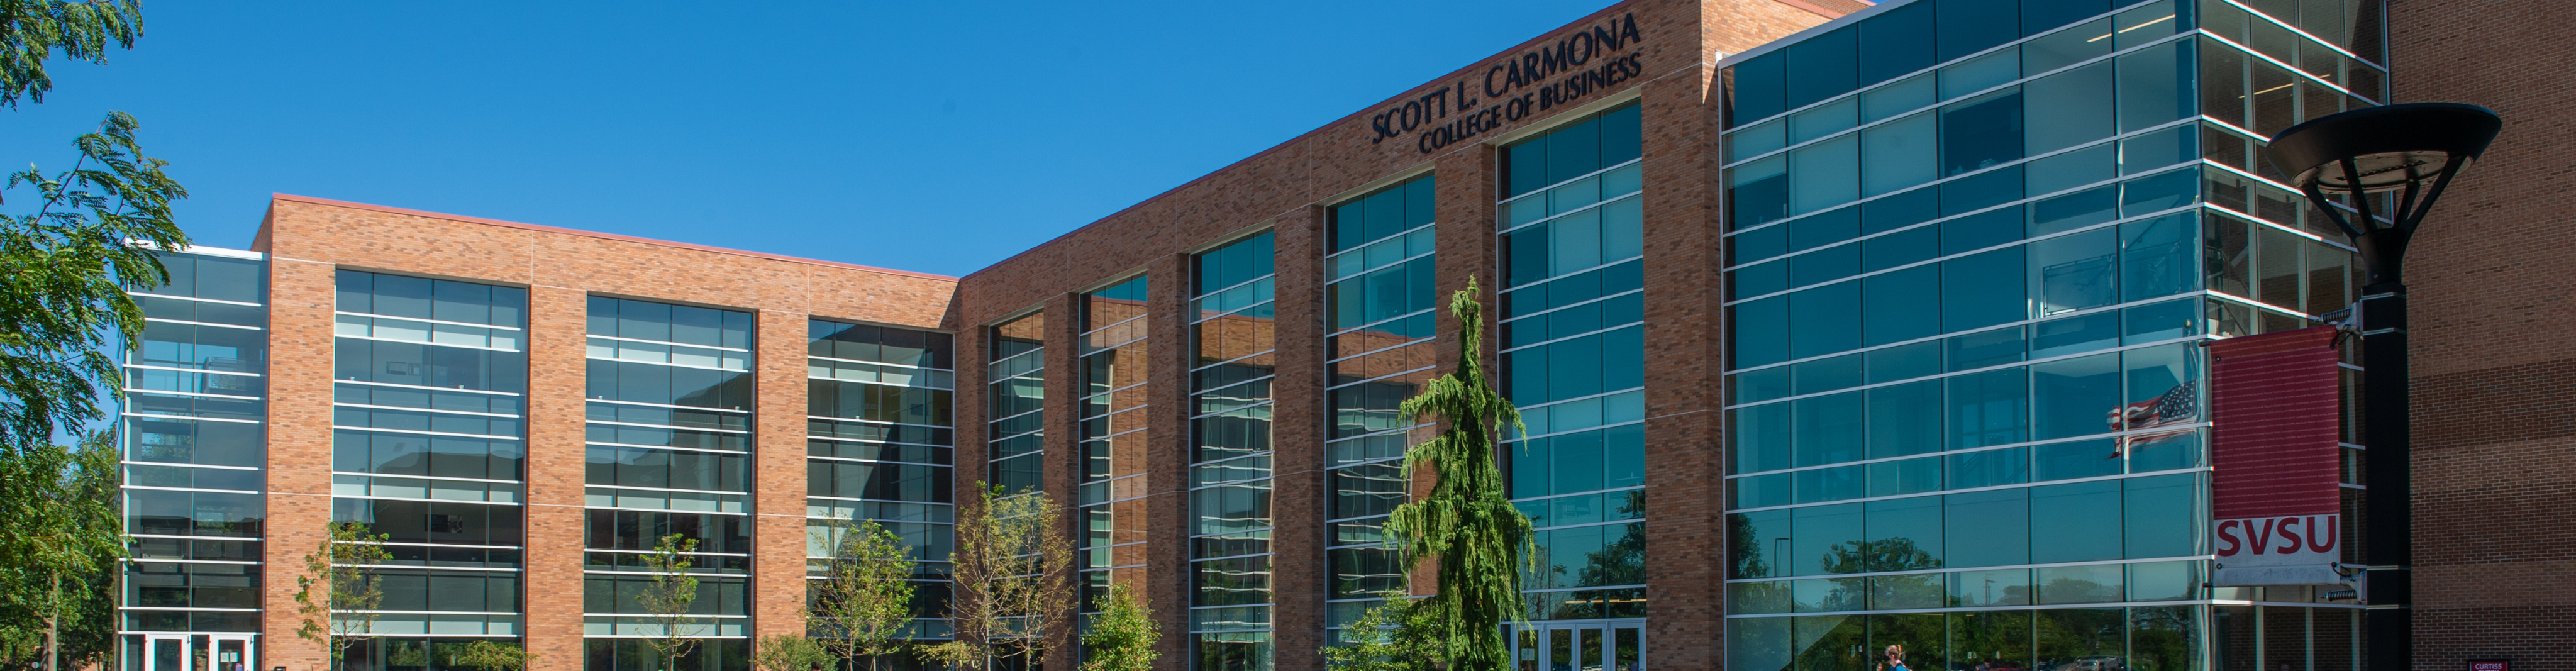 Scott L. Carmona College of Business Building